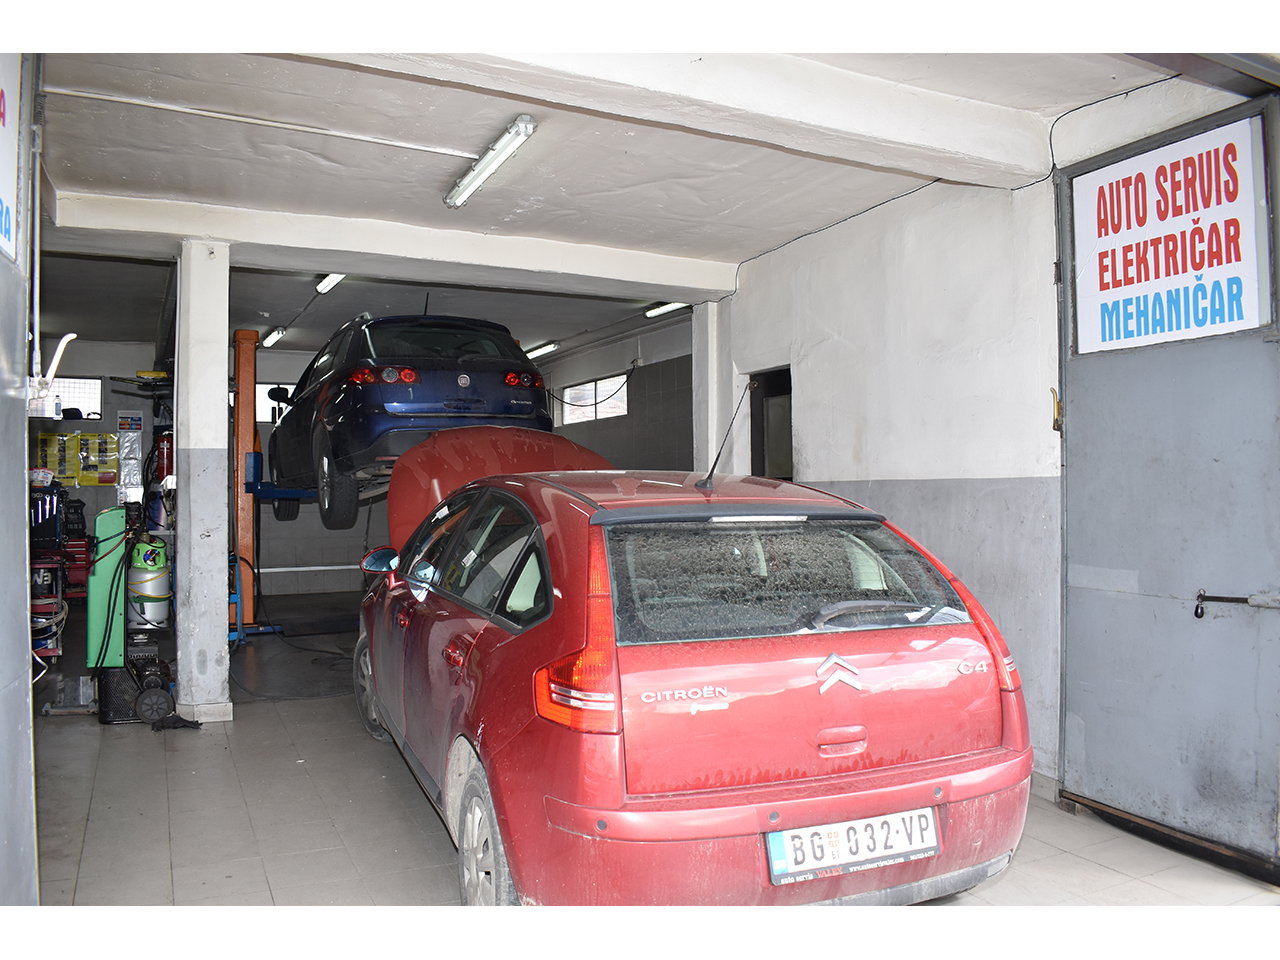 CAR SERVICE ELECTRICS MECHANICS TOWING MANE Towing service Beograd